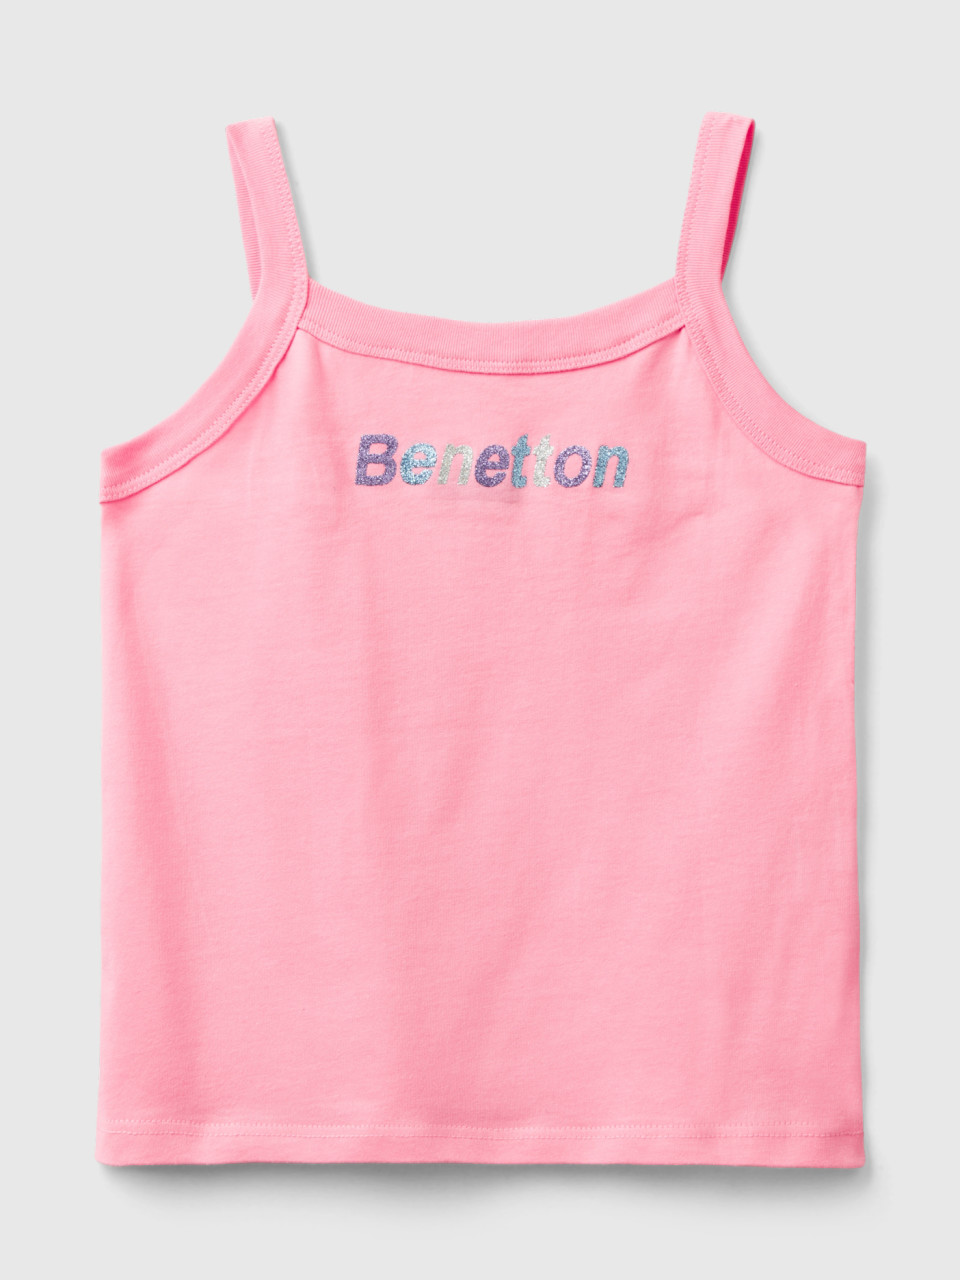 Benetton, Tank Top With Glittery Logo Print, Pink, Kids